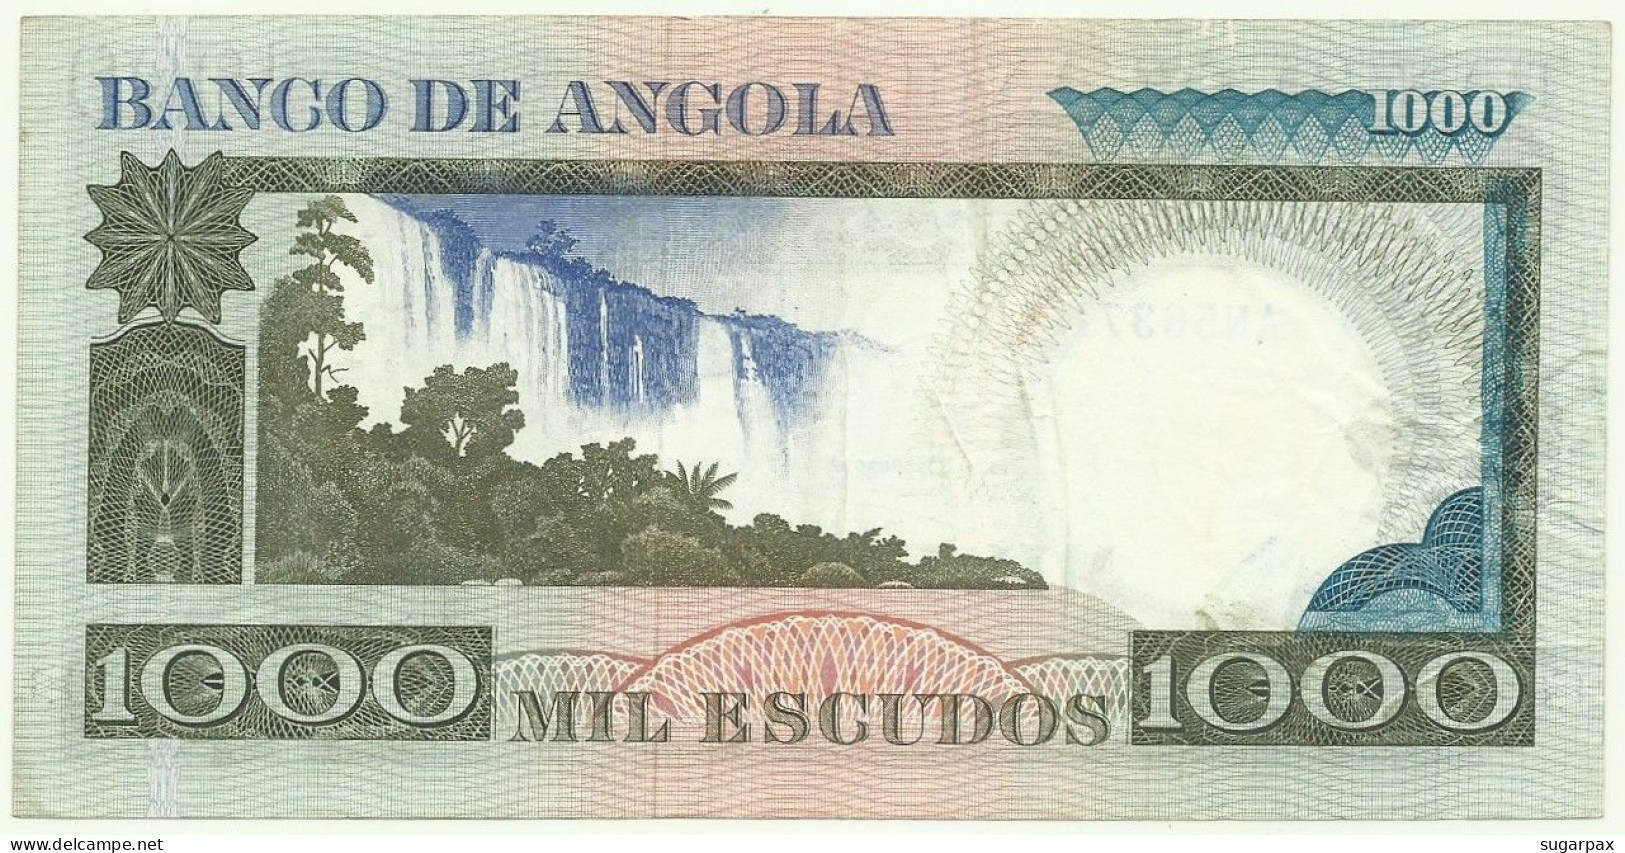 Angola - 1000 Escudos - 10.6.1973 - Pick: 108 - Serie AN - Luiz De Camões - PORTUGAL - 1.000 - Angola